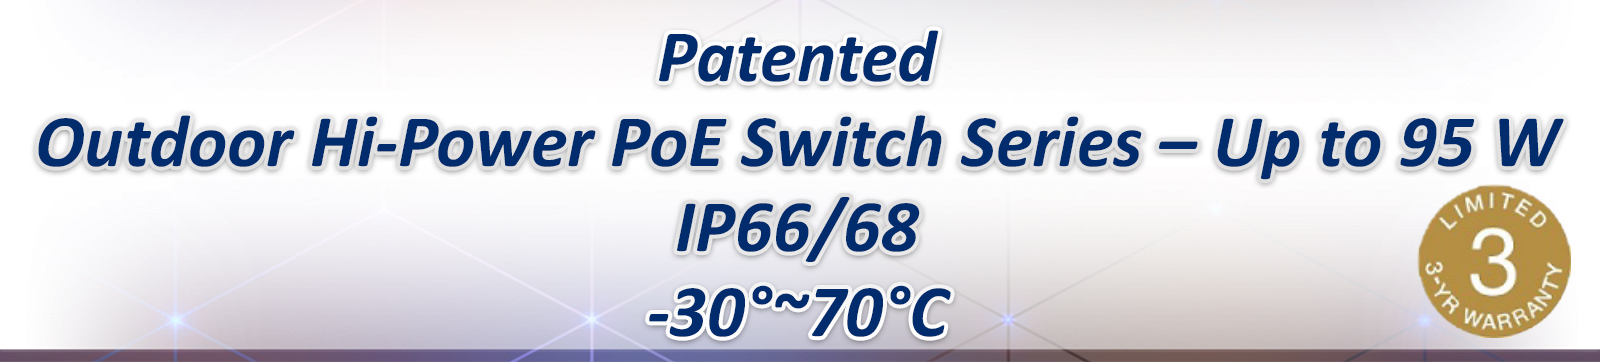 Outdoor PoE Remote Reboot & Power Mangement, Surge Protection & Weatherproof Enclosure